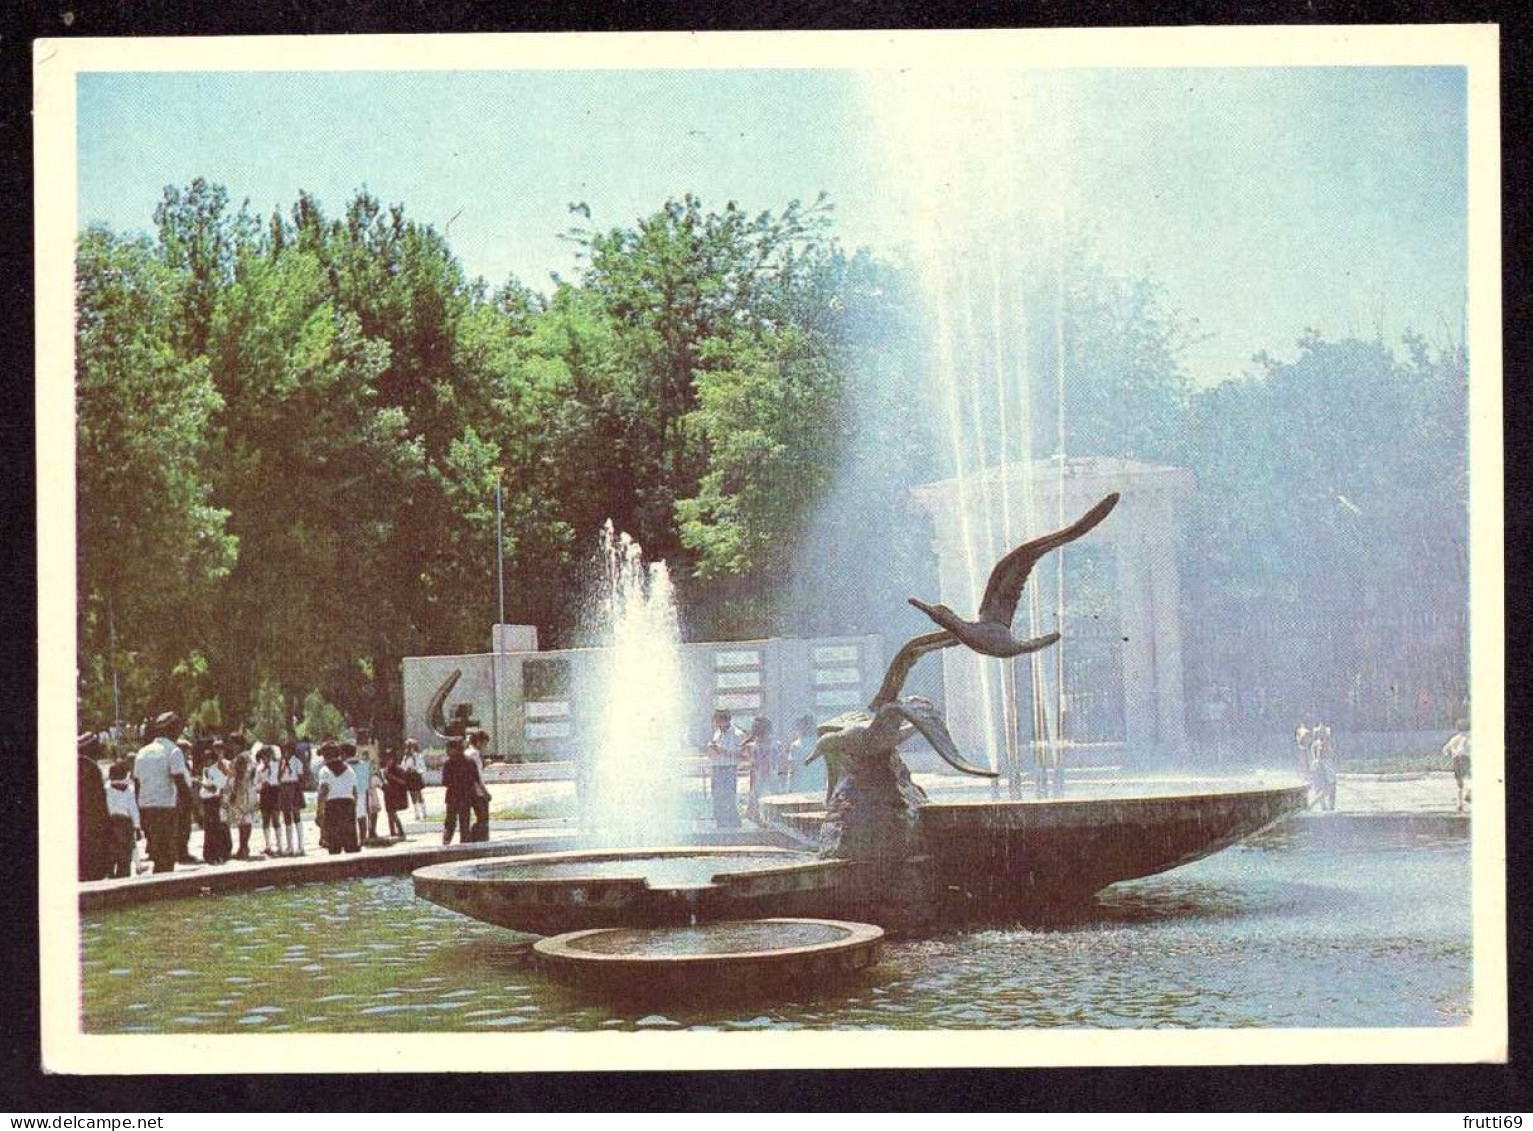 AK 212353 UZBEKISTAN - Samarkand - Sea-Gull Fountain In The Recreation Park - Usbekistan